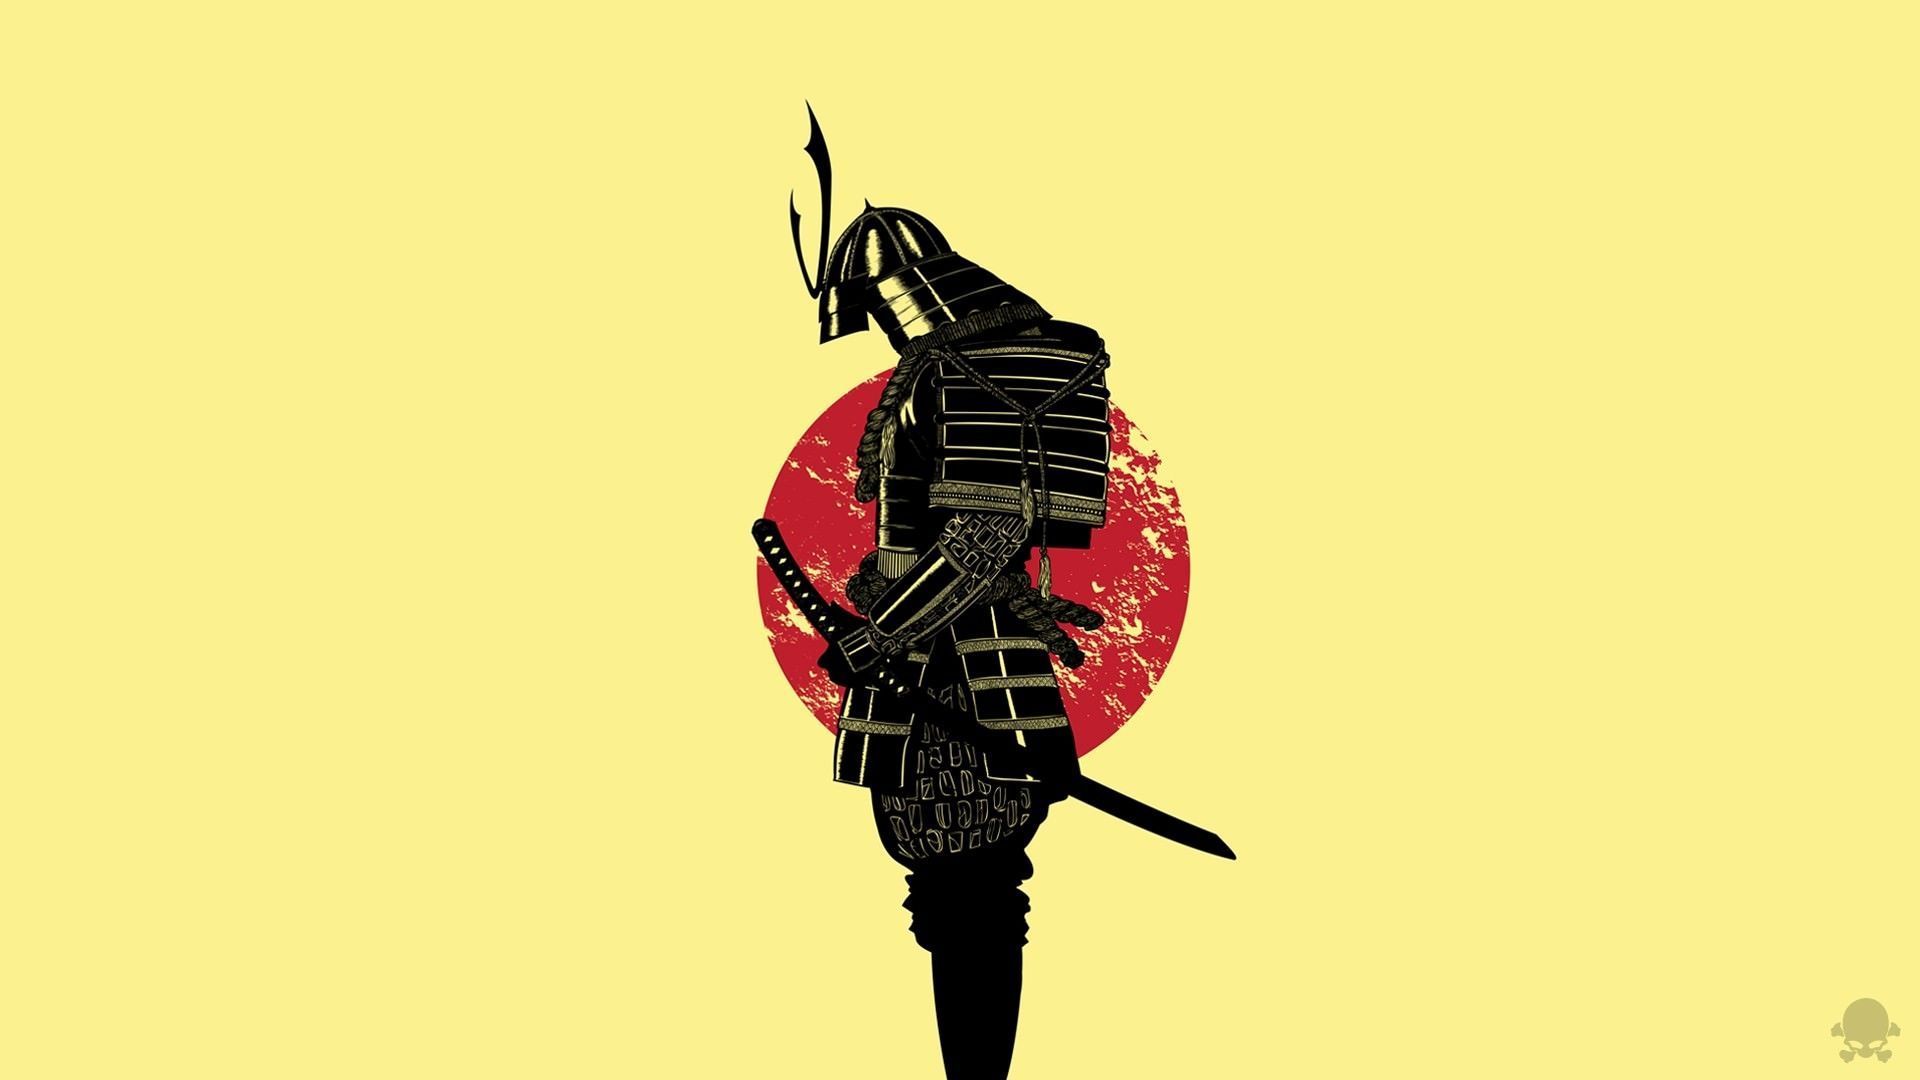 A samurai standing in front of a red sun - Samurai